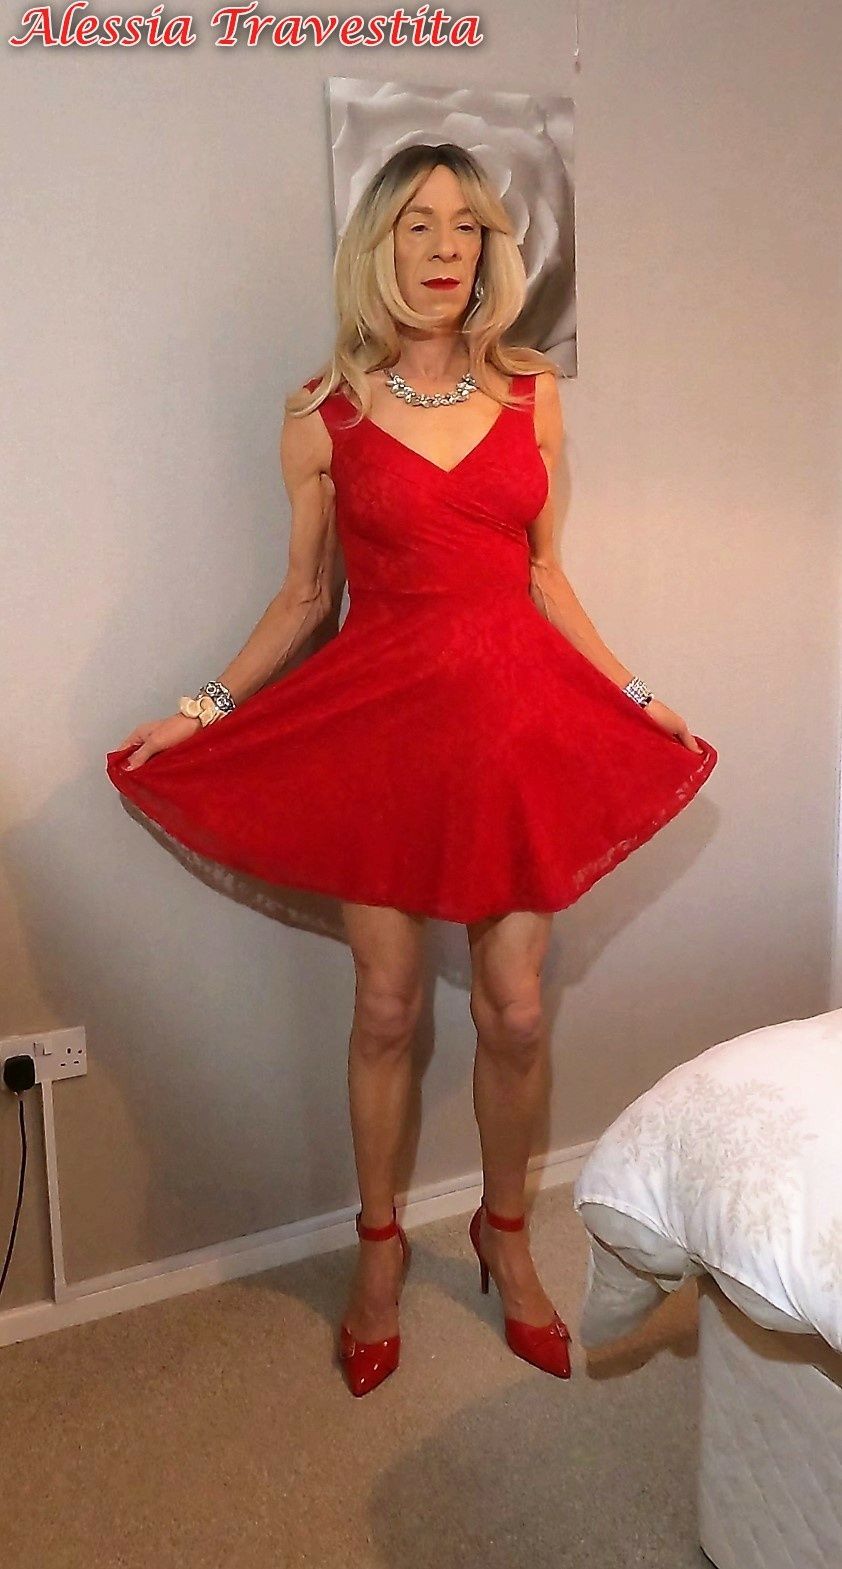 65 Alessia Travestita in Flirty Red Dress #28